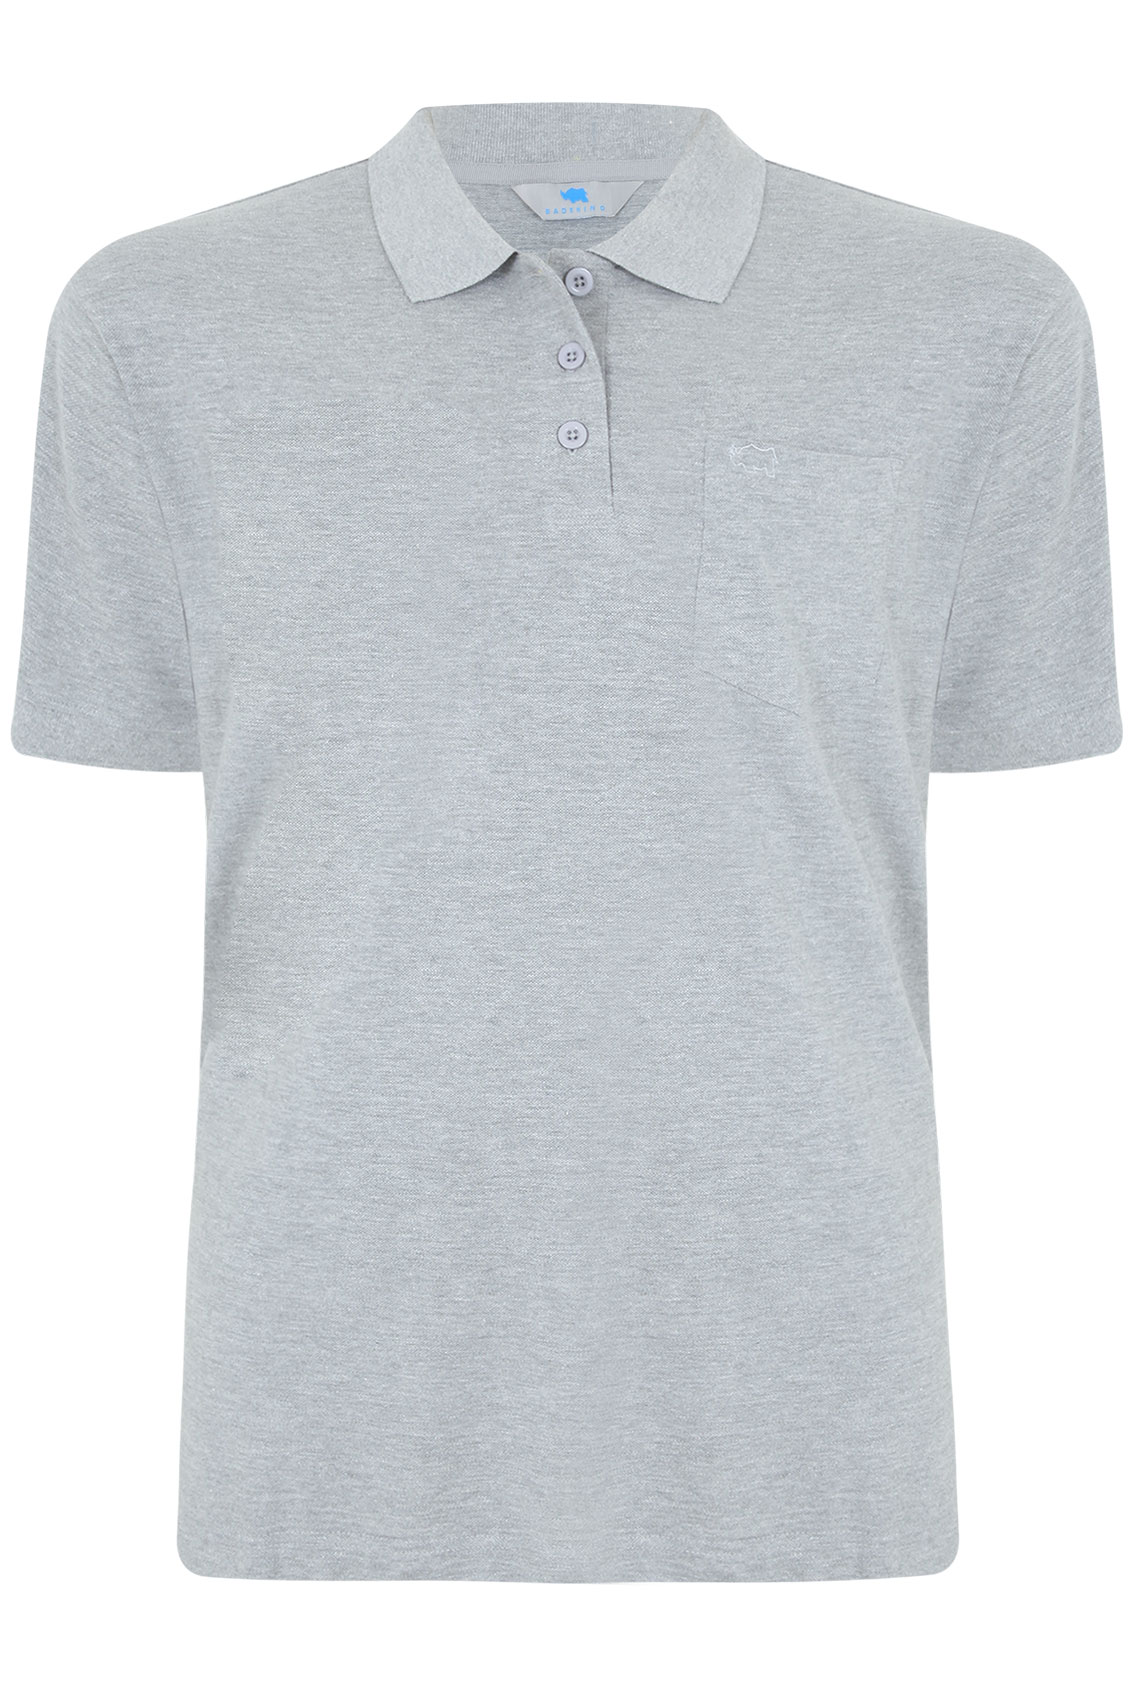 BadRhino Light Grey Marl Plain Polo Shirt - TALL Extra large sizes M,L ...